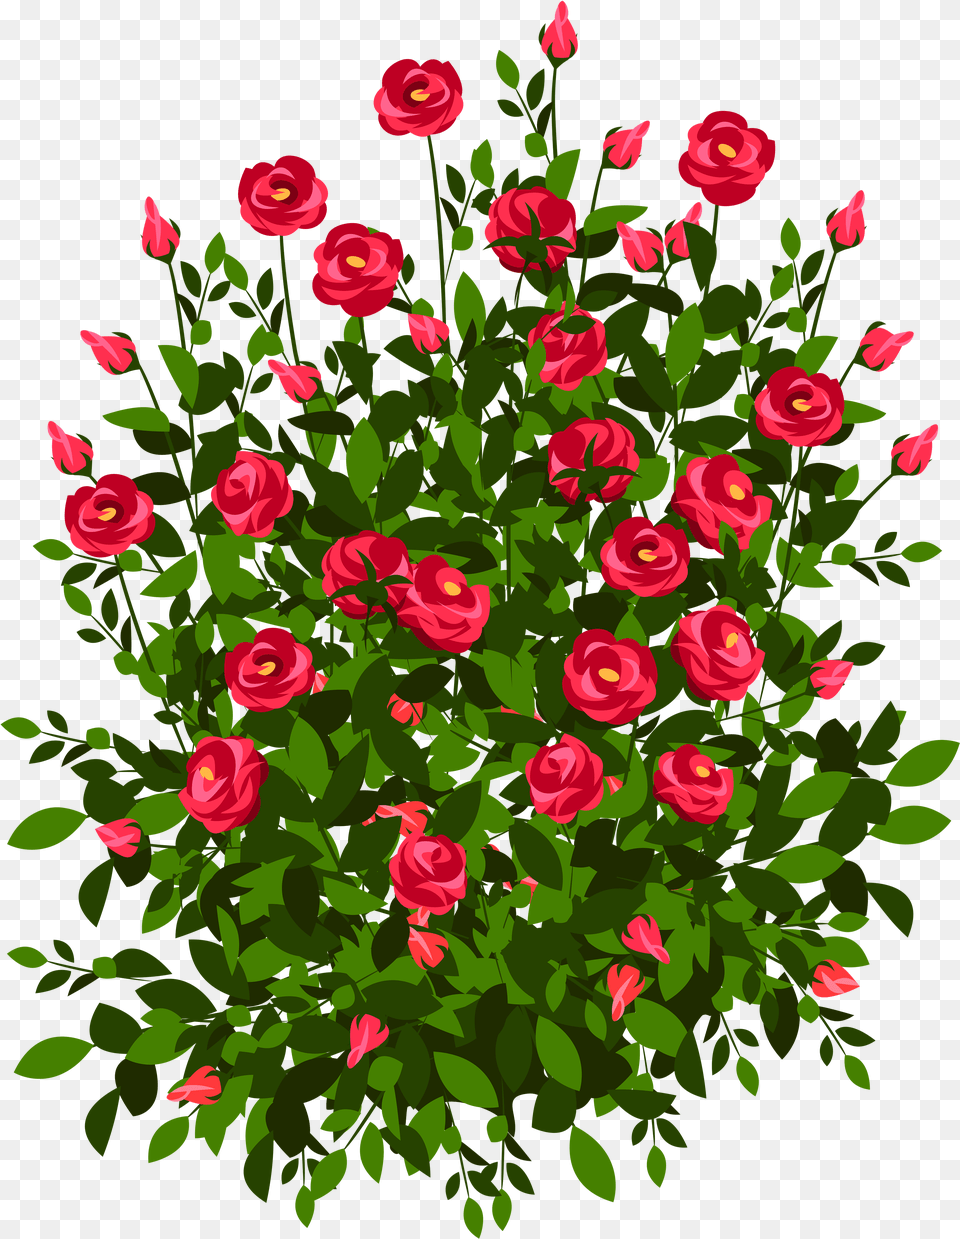 Flower Bush Clipart For Download Draw A Rose Bush, Art, Plant, Pattern, Graphics Png Image